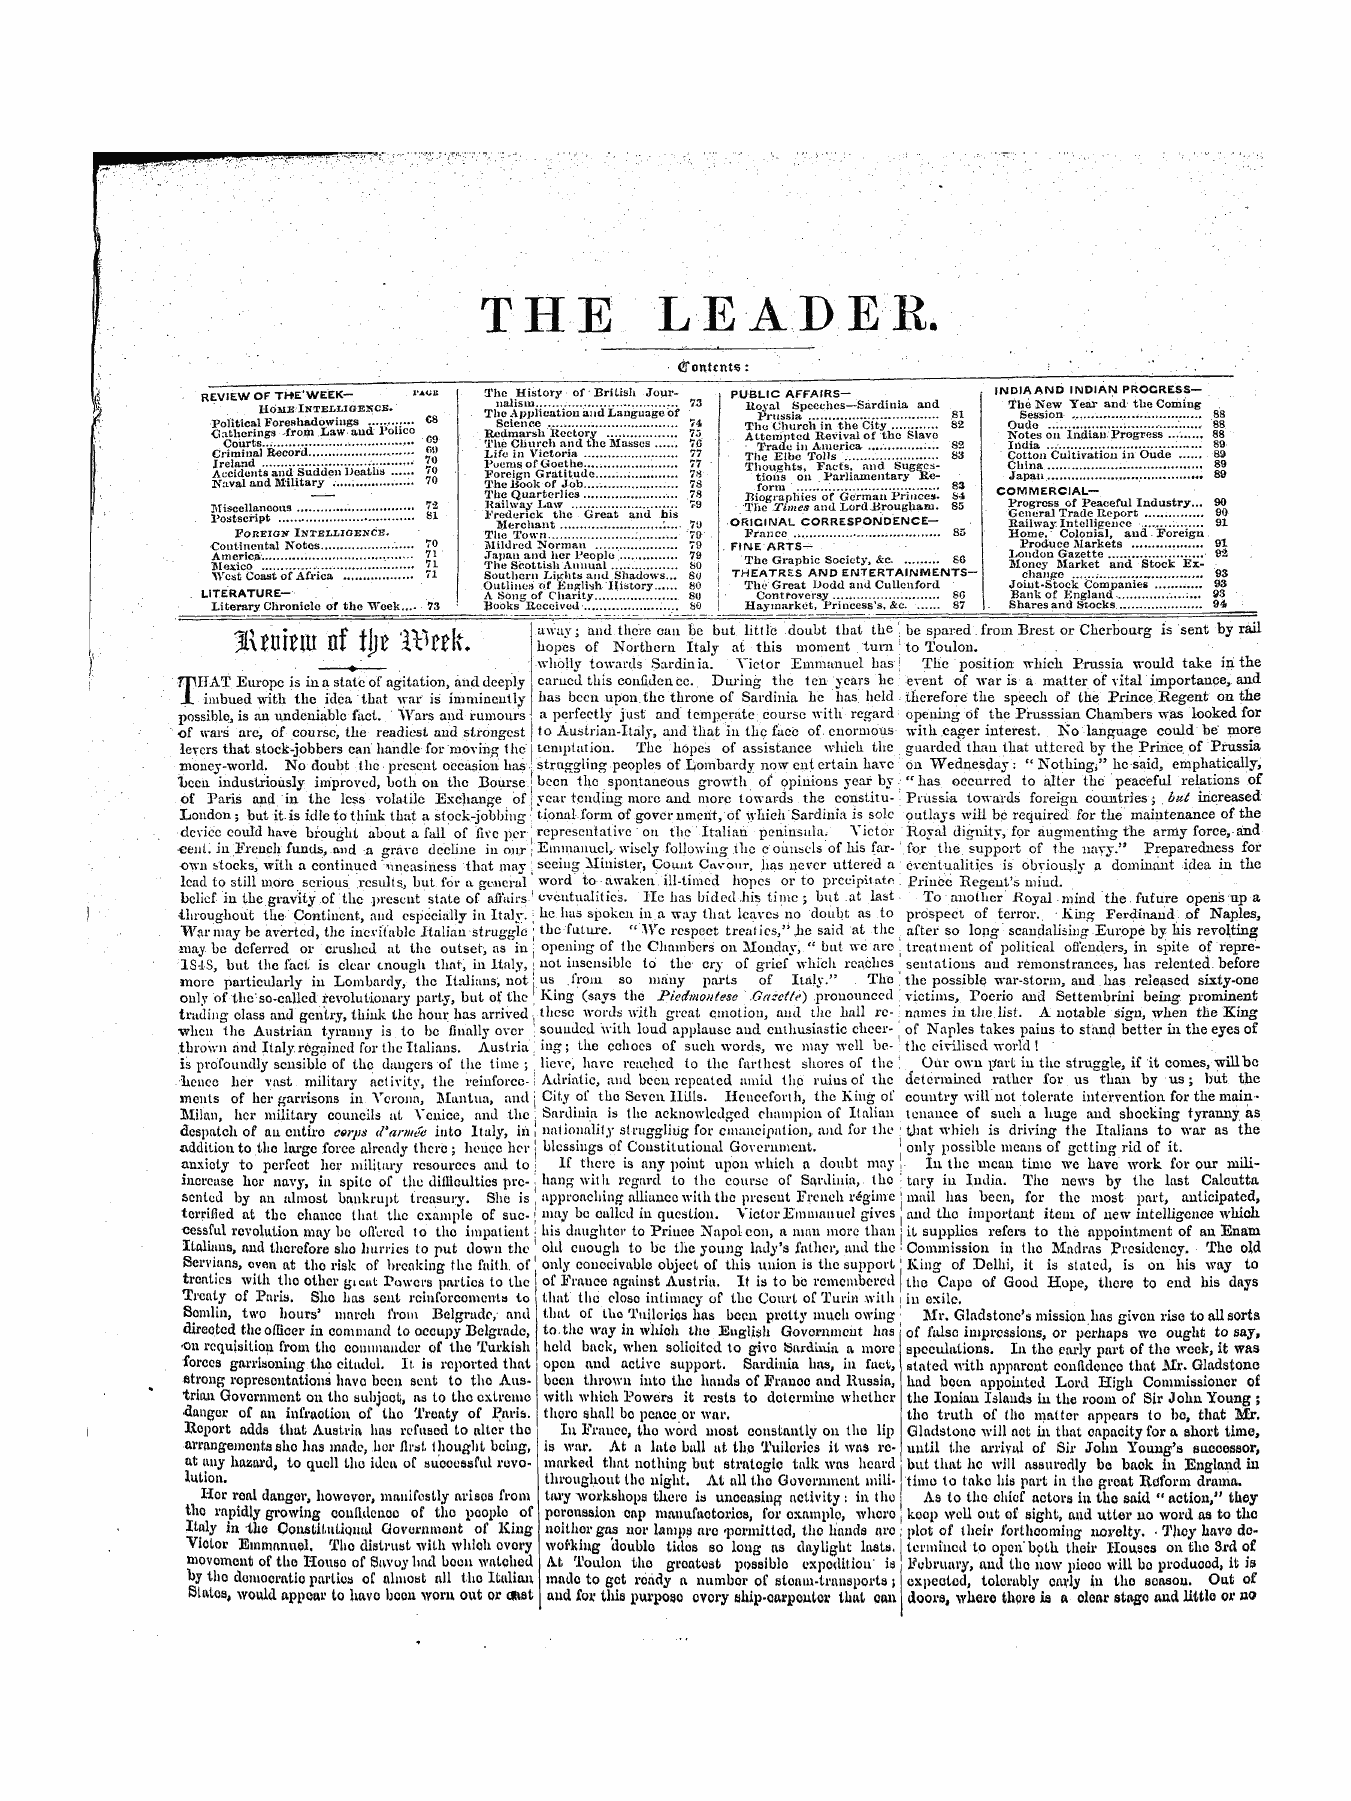 Leader (1850-1860): jS F Y, 1st edition - ¦ • ' ¦ . • Ctontcnts: ' ' ' " ' ¦ " . . ¦ • ¦ . . " .. ., "